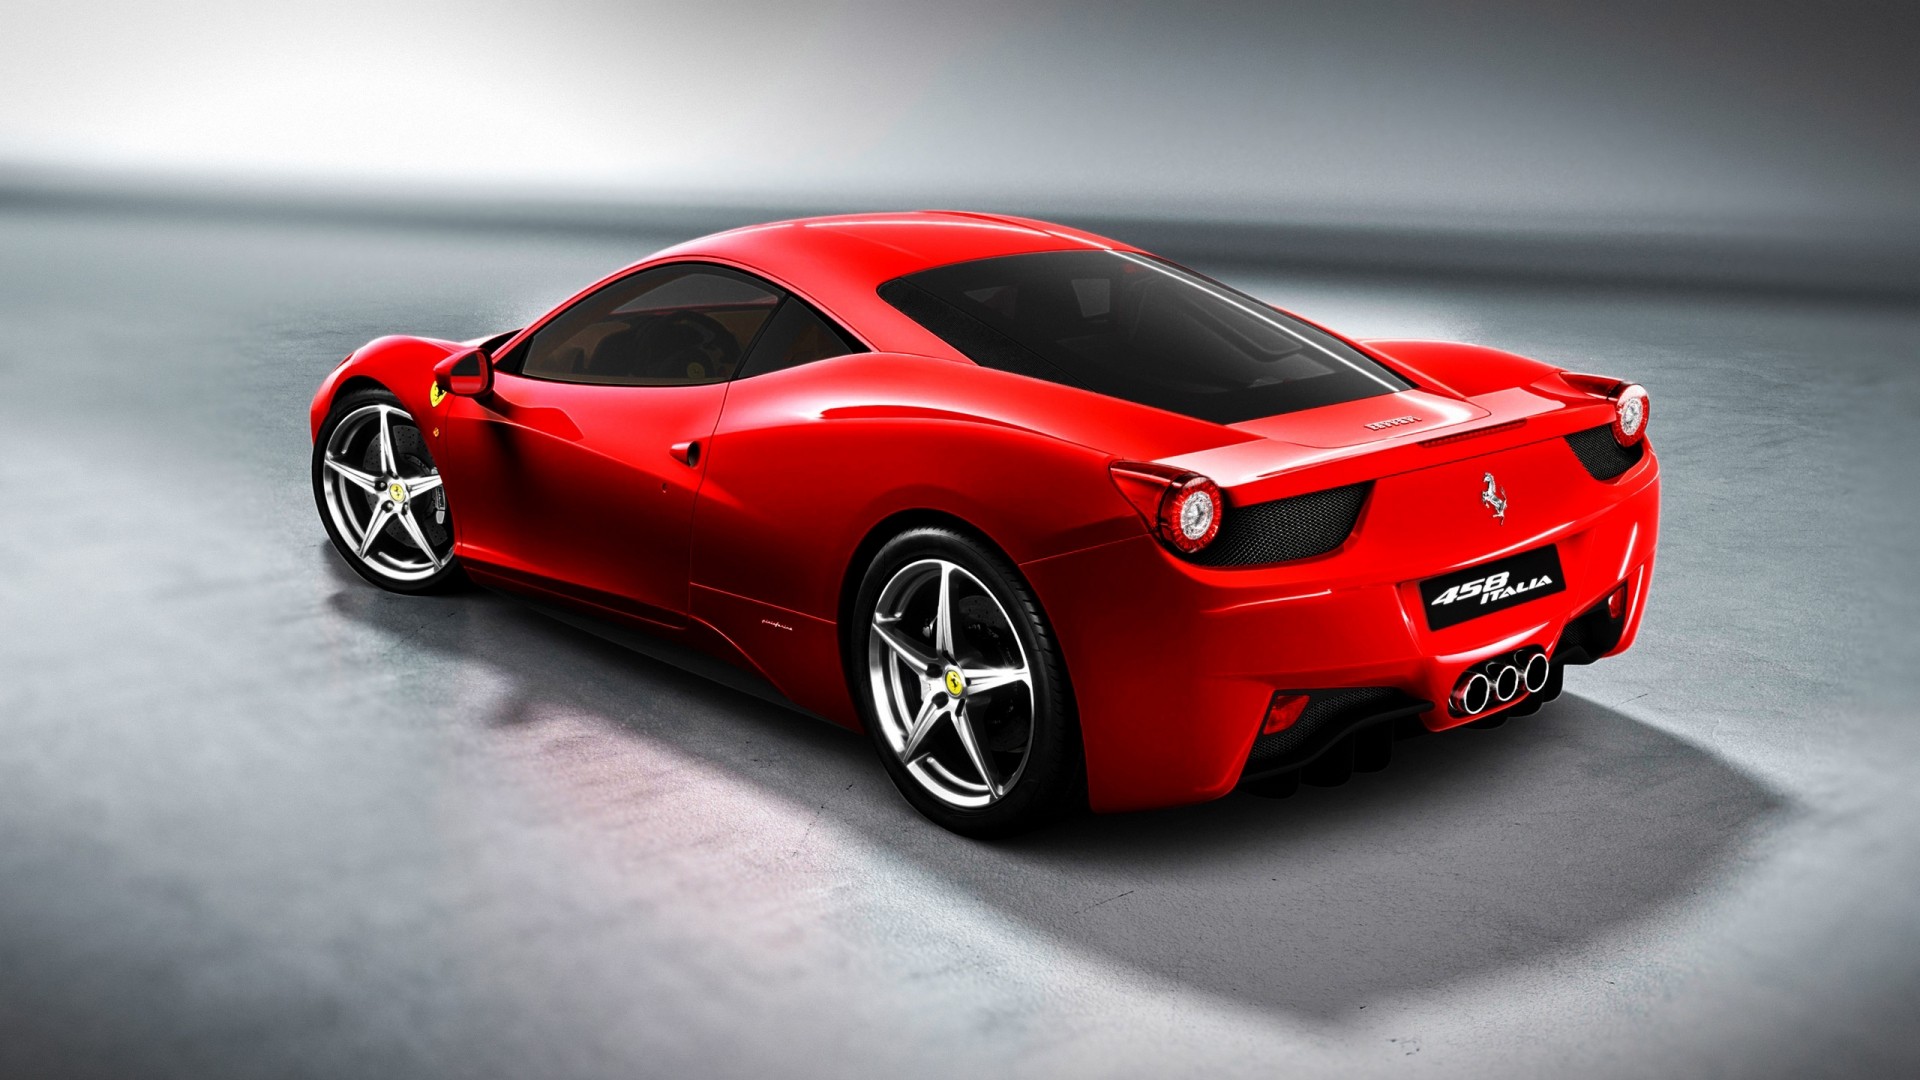 cars, Ferrari, red cars, sports cars - desktop wallpaper